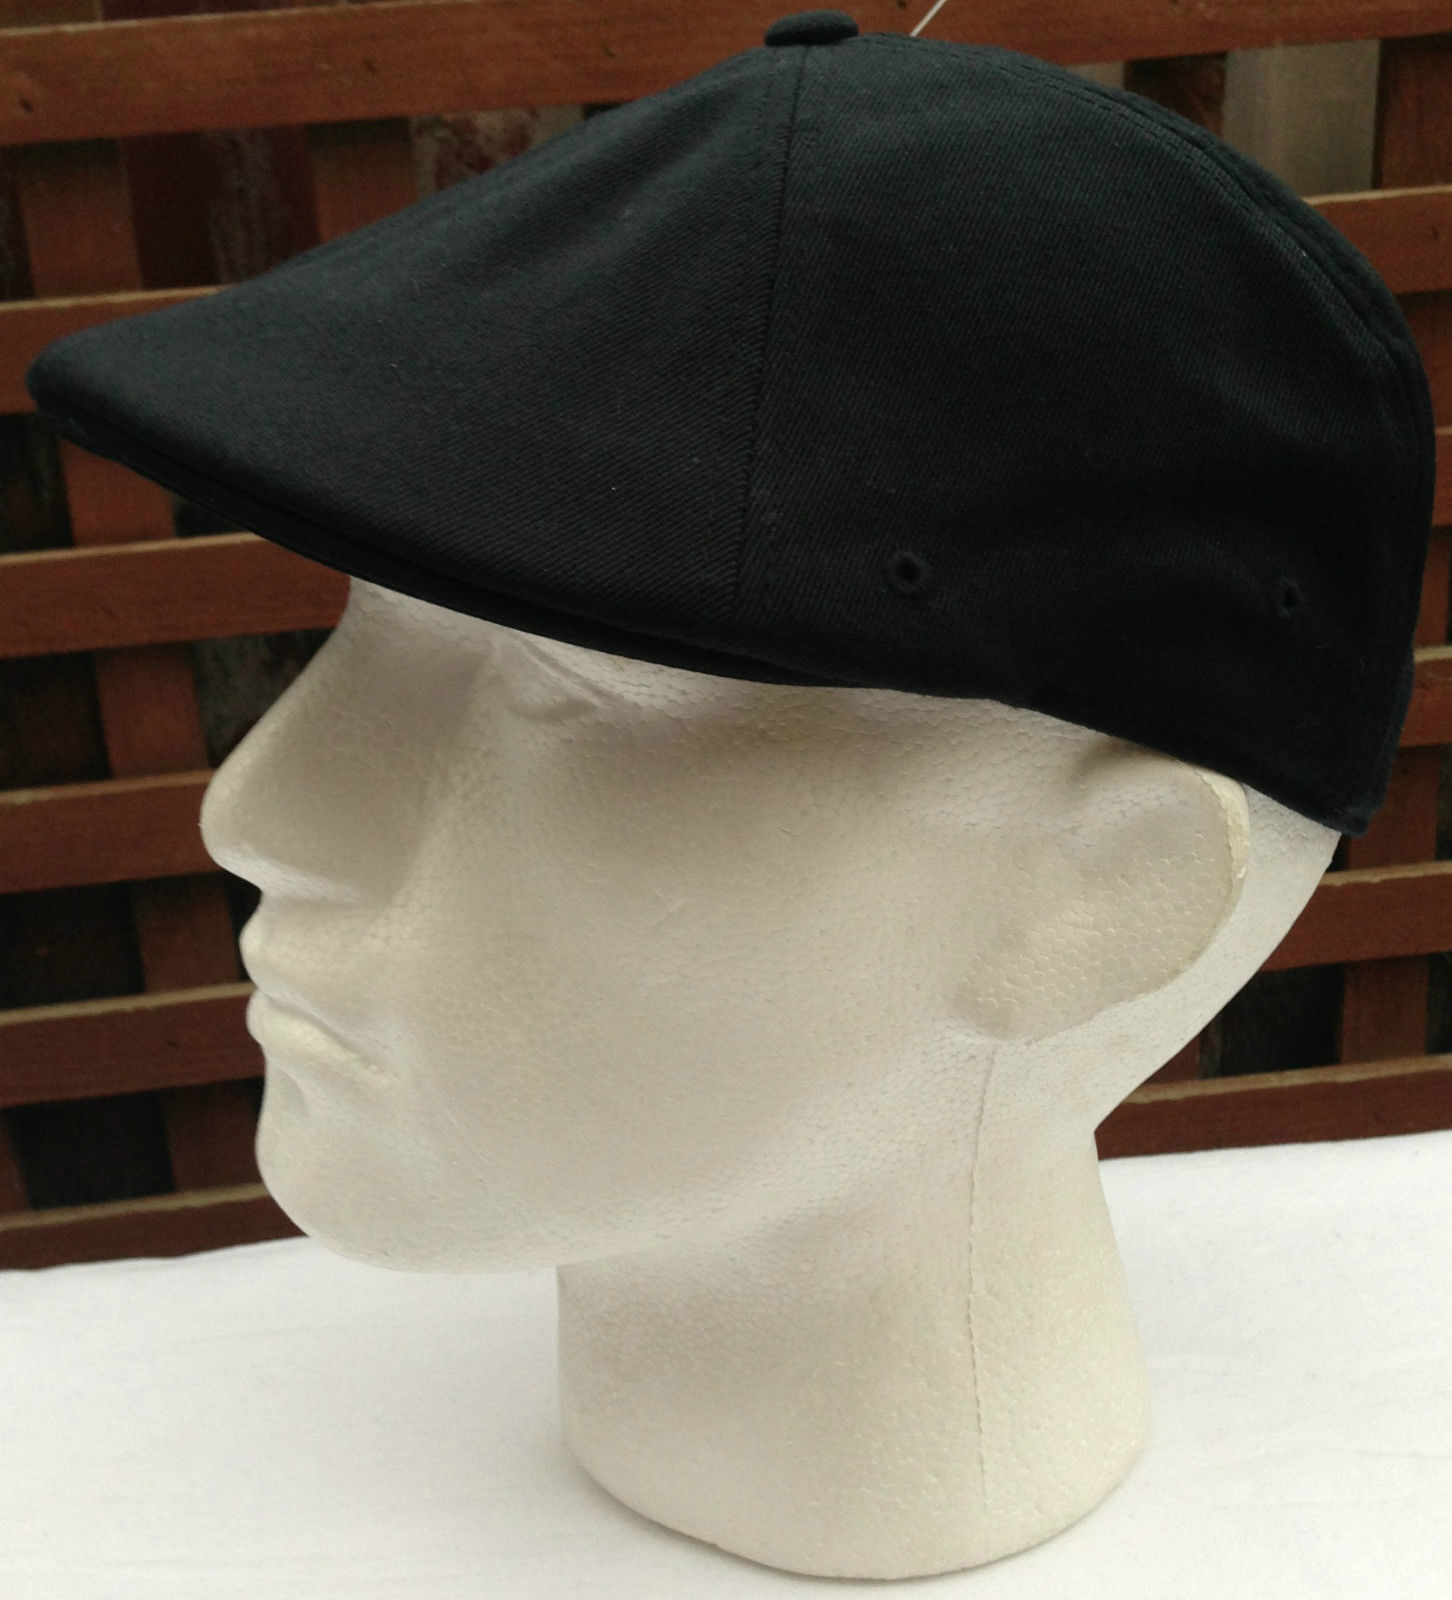 KANGOL Wool Flexfit 504 Ivy Cap K0873CO Newsboy Driving Hat with ...